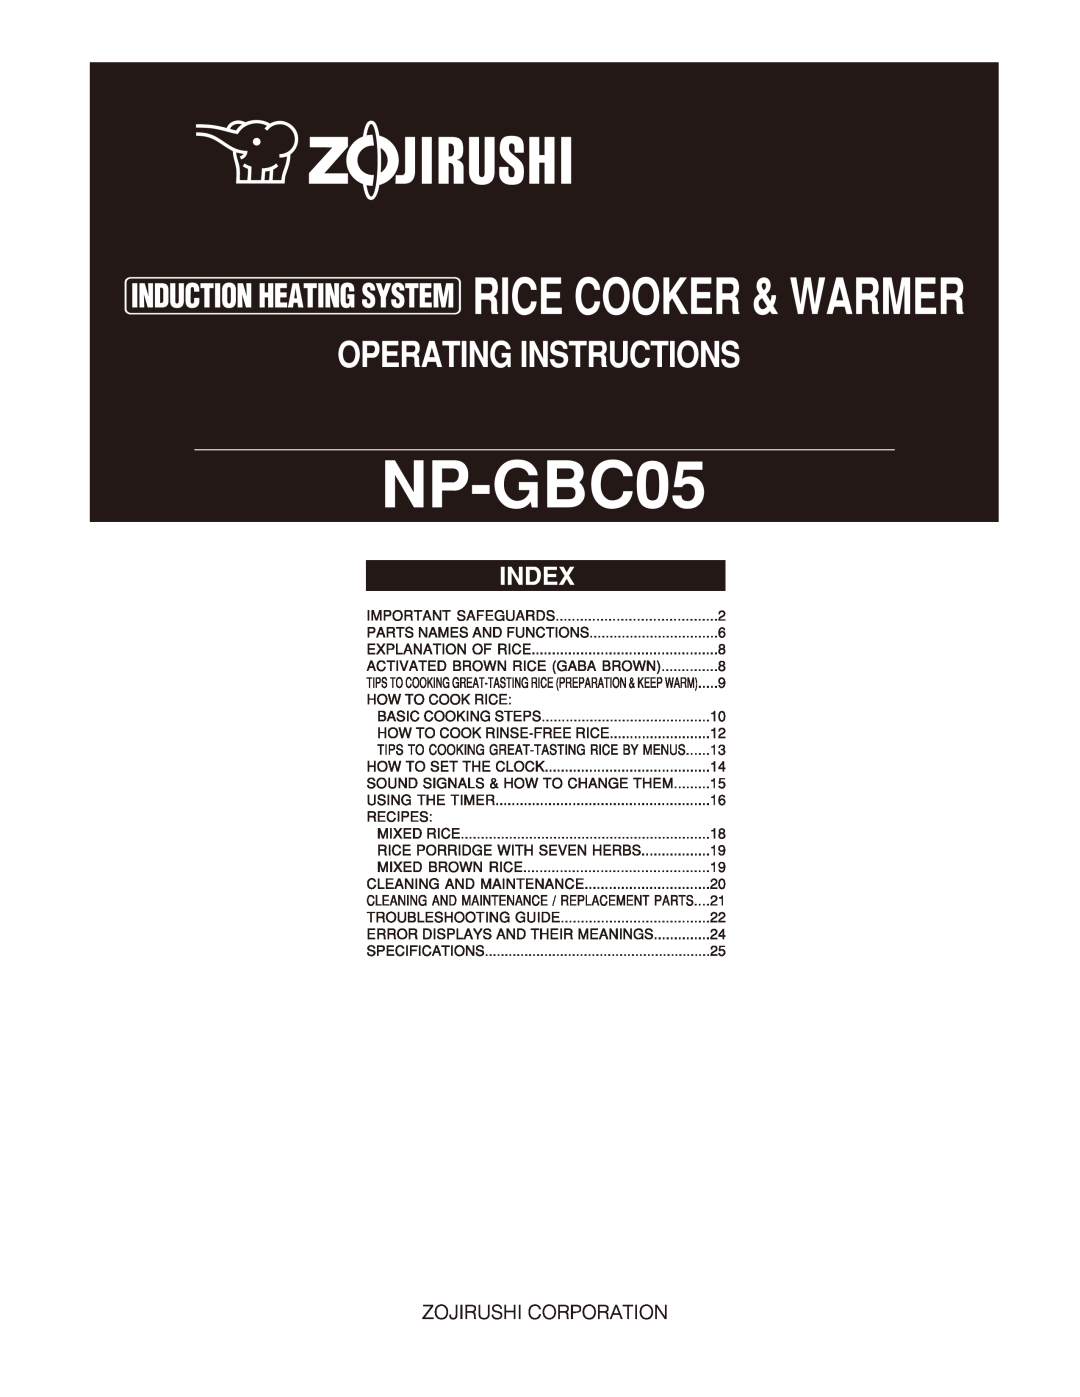 Zojirushi NP-GBC05 manual 